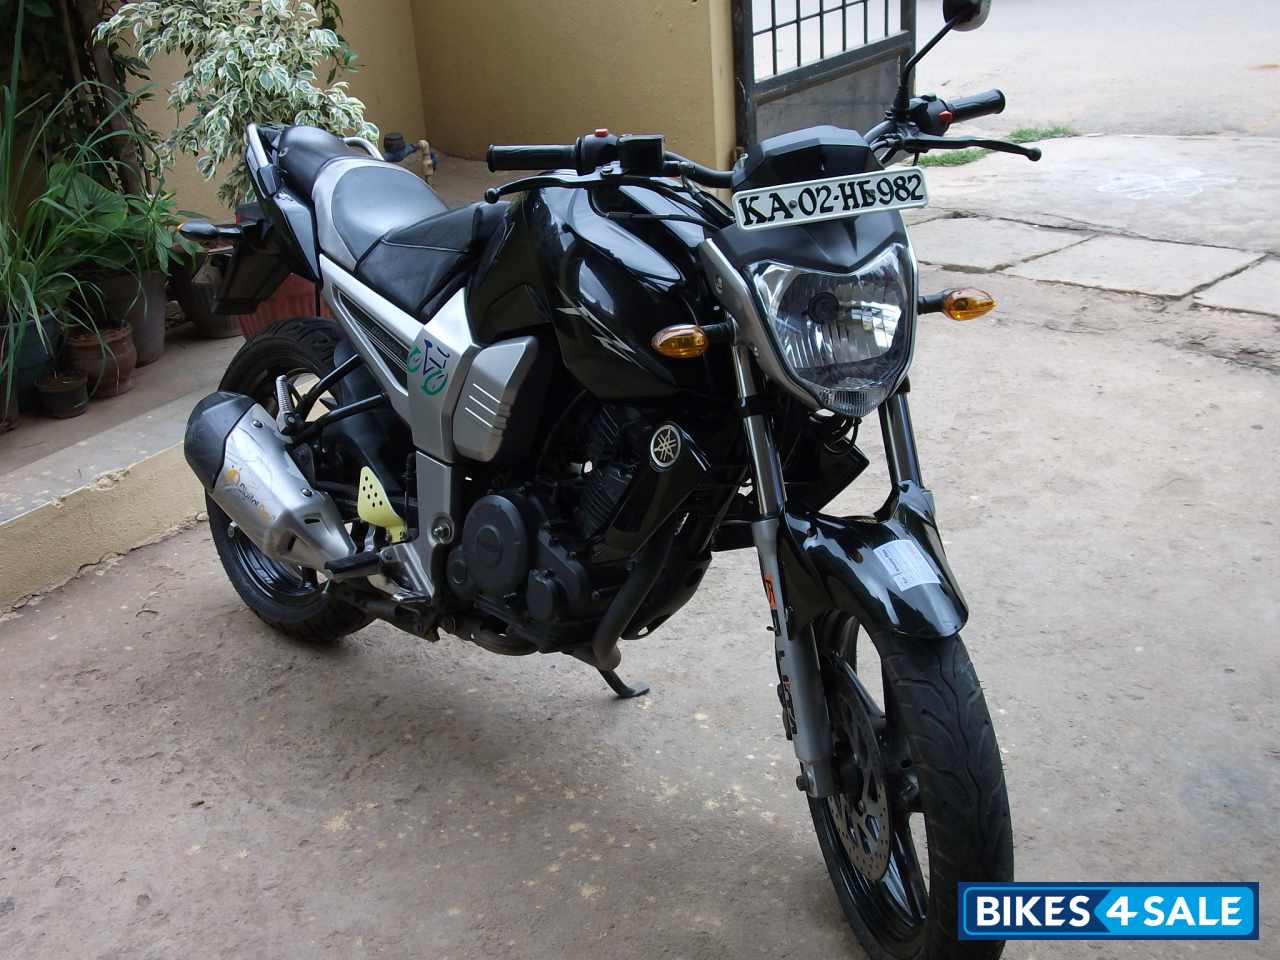 Used 2009 model Yamaha FZ16 for sale in Bangalore. ID 86297. Black ...